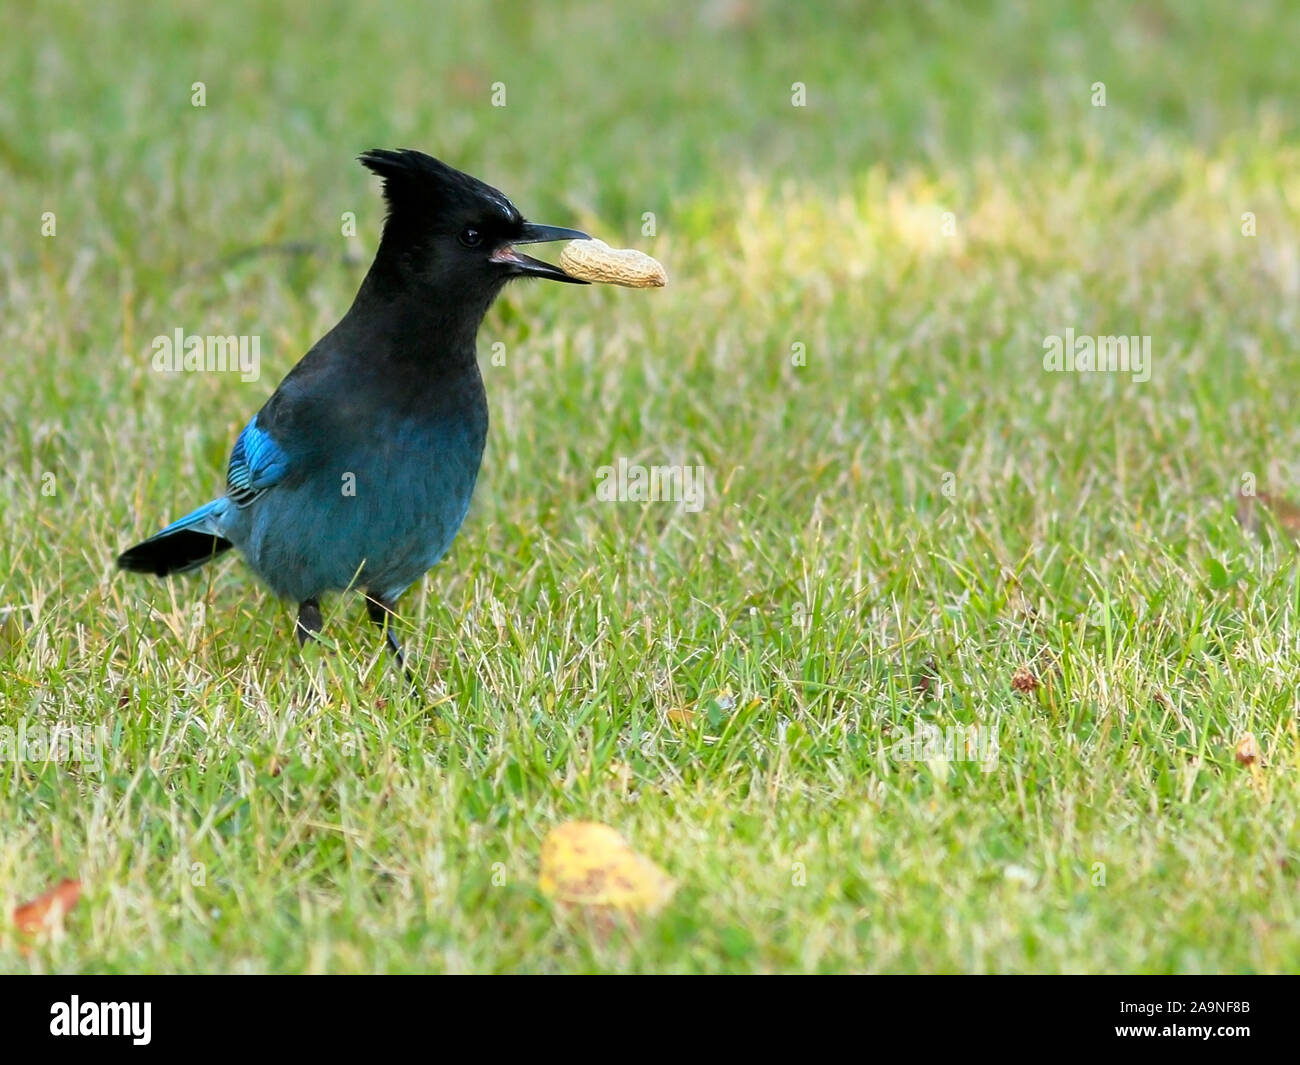 Steller Jay in erba, tenendo peanut nel becco, guardando avviso. Foto Stock